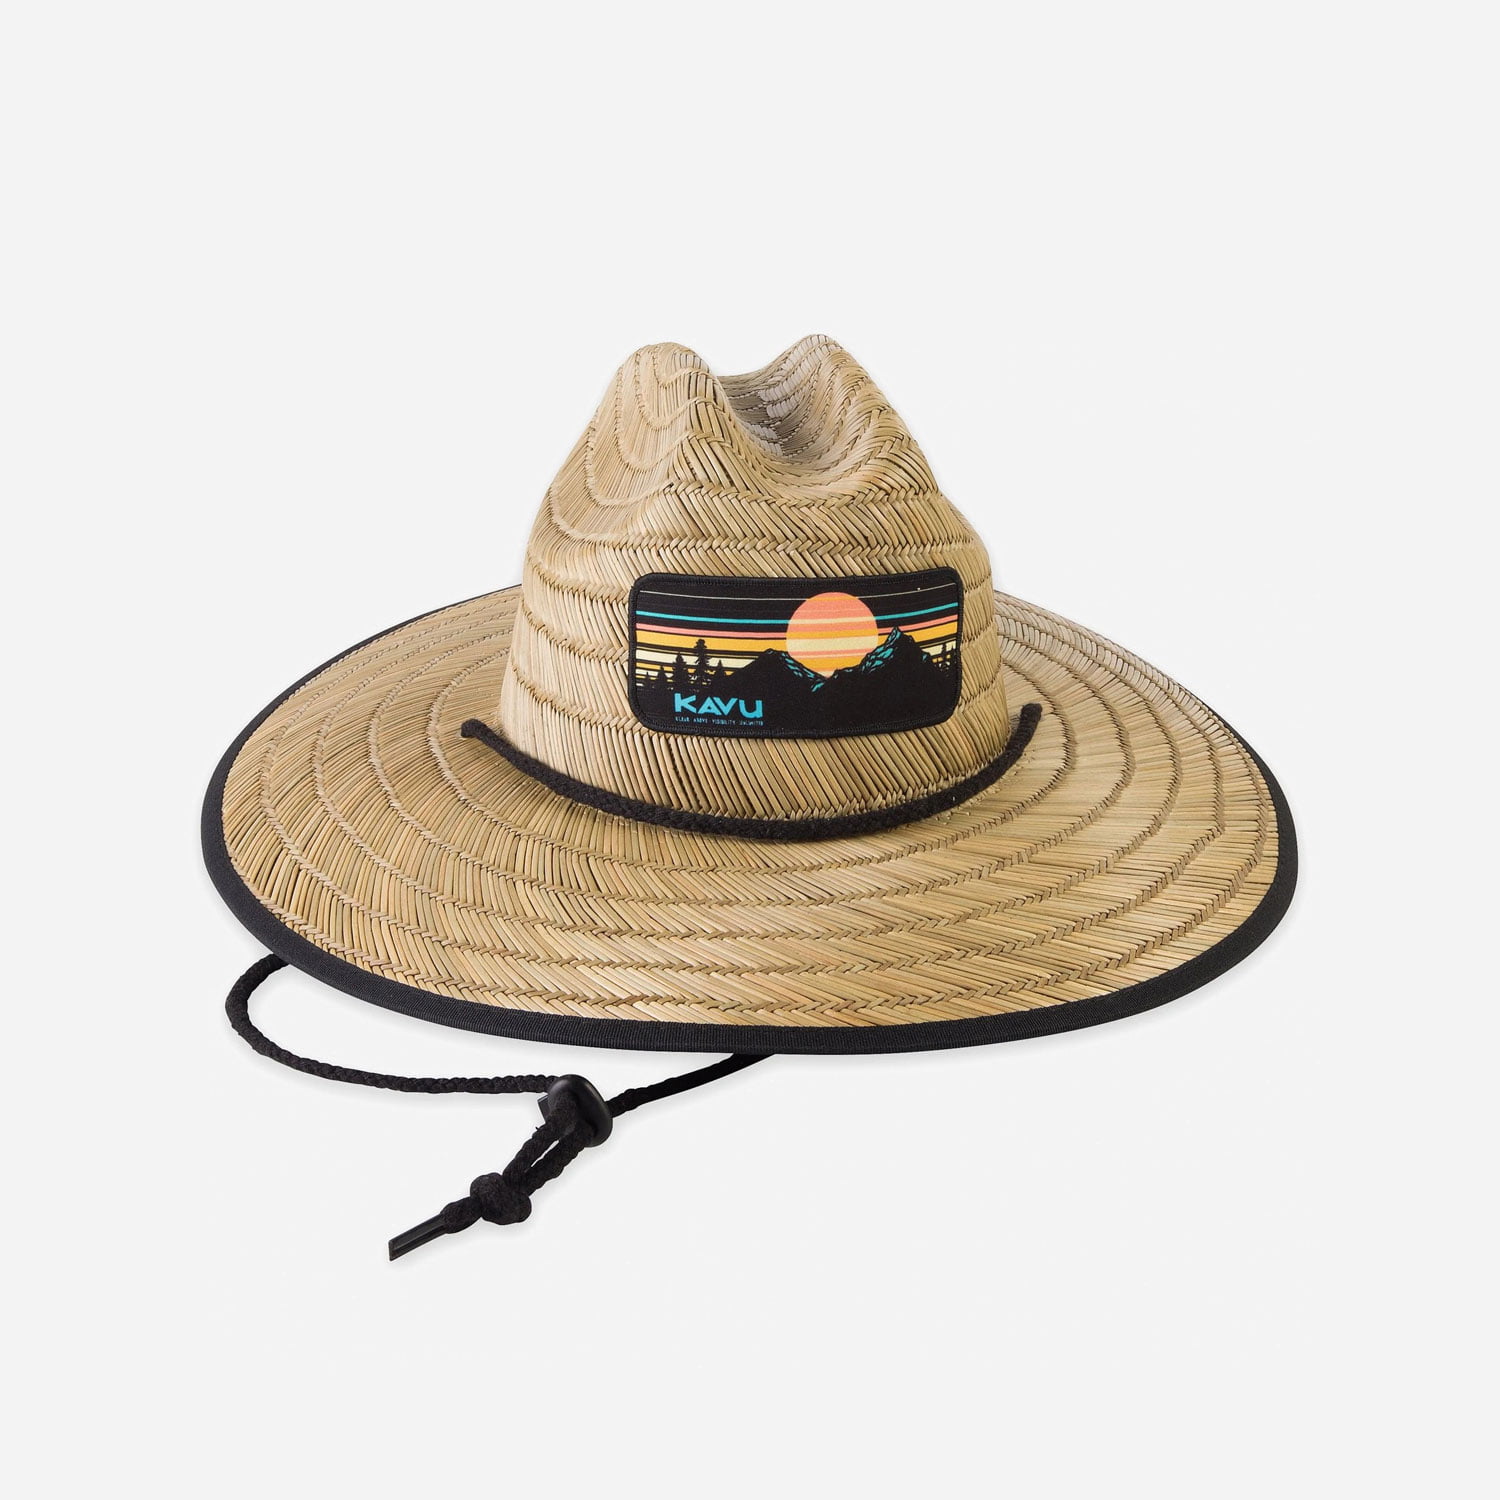 Kavu Sundee Long Brimmed Straw Hat - Natural